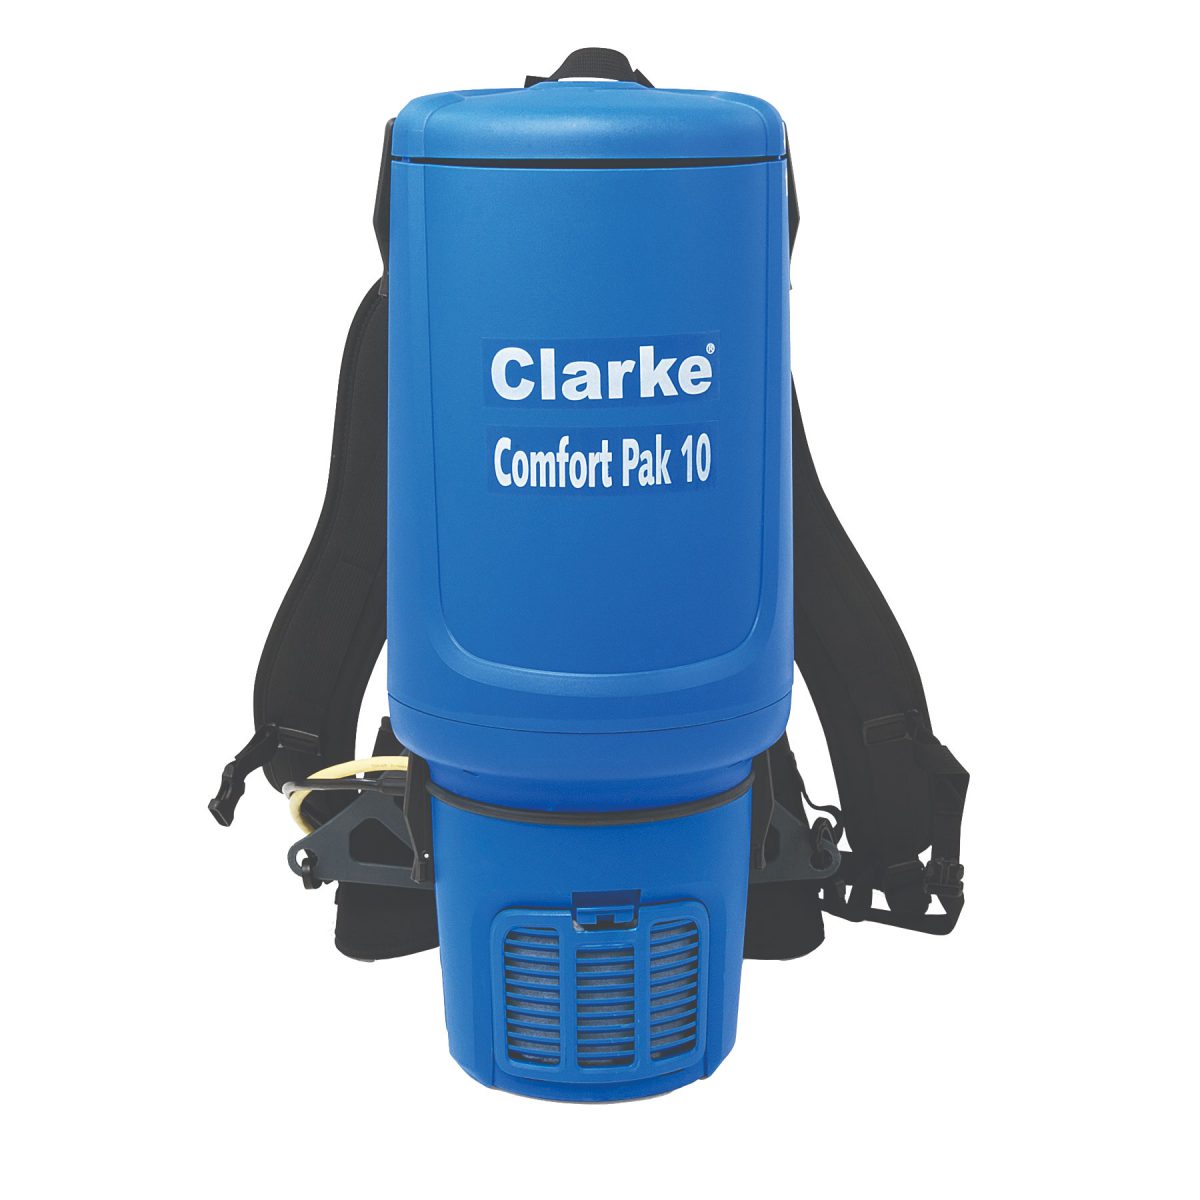 Clarke Comfort Pak 10 Backpack Vacuum